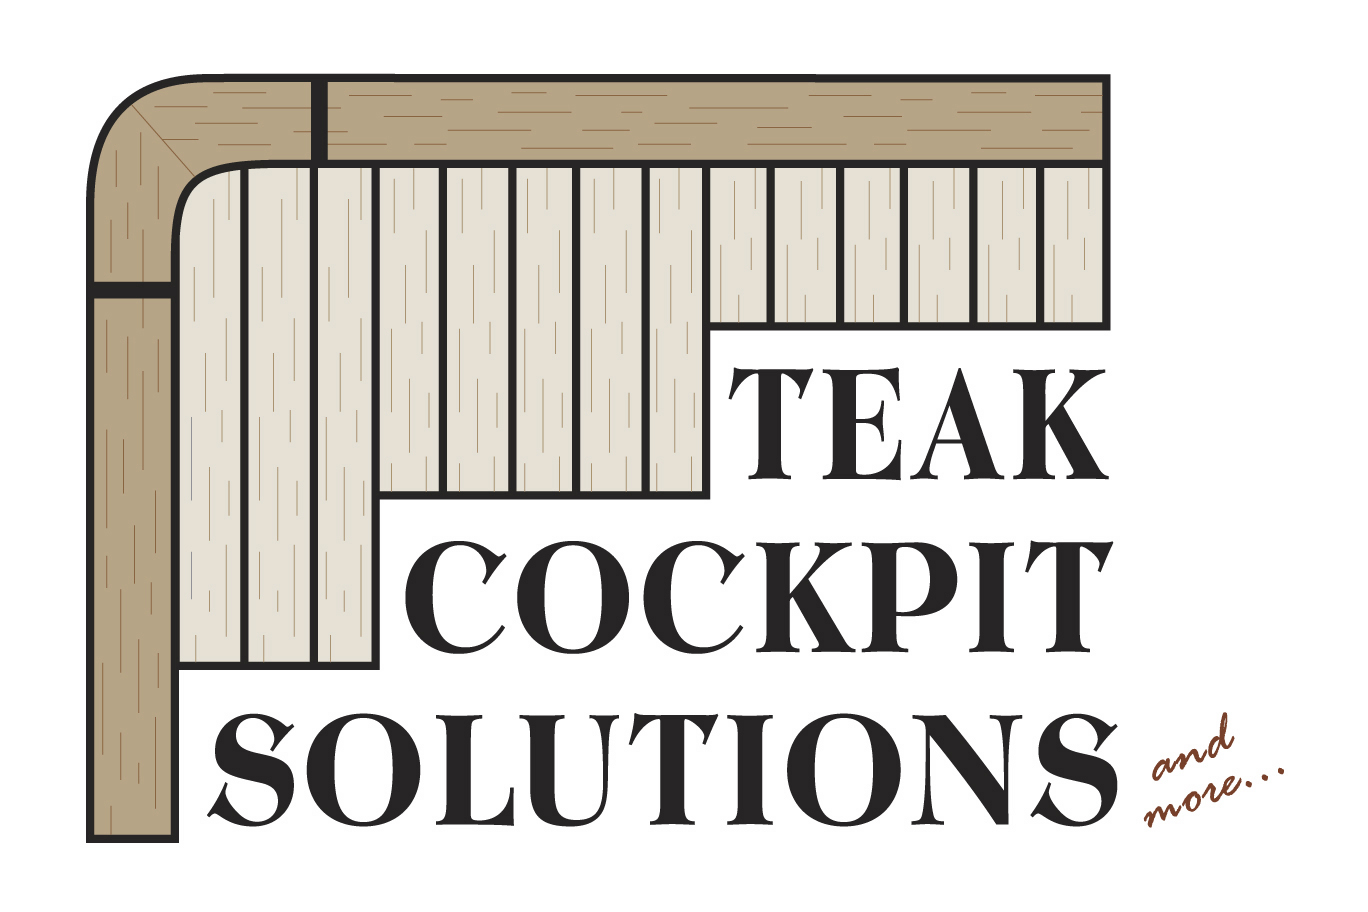 TEAK COCKPIT SOLUTIONS INC AND CABANABOATBAR.COM